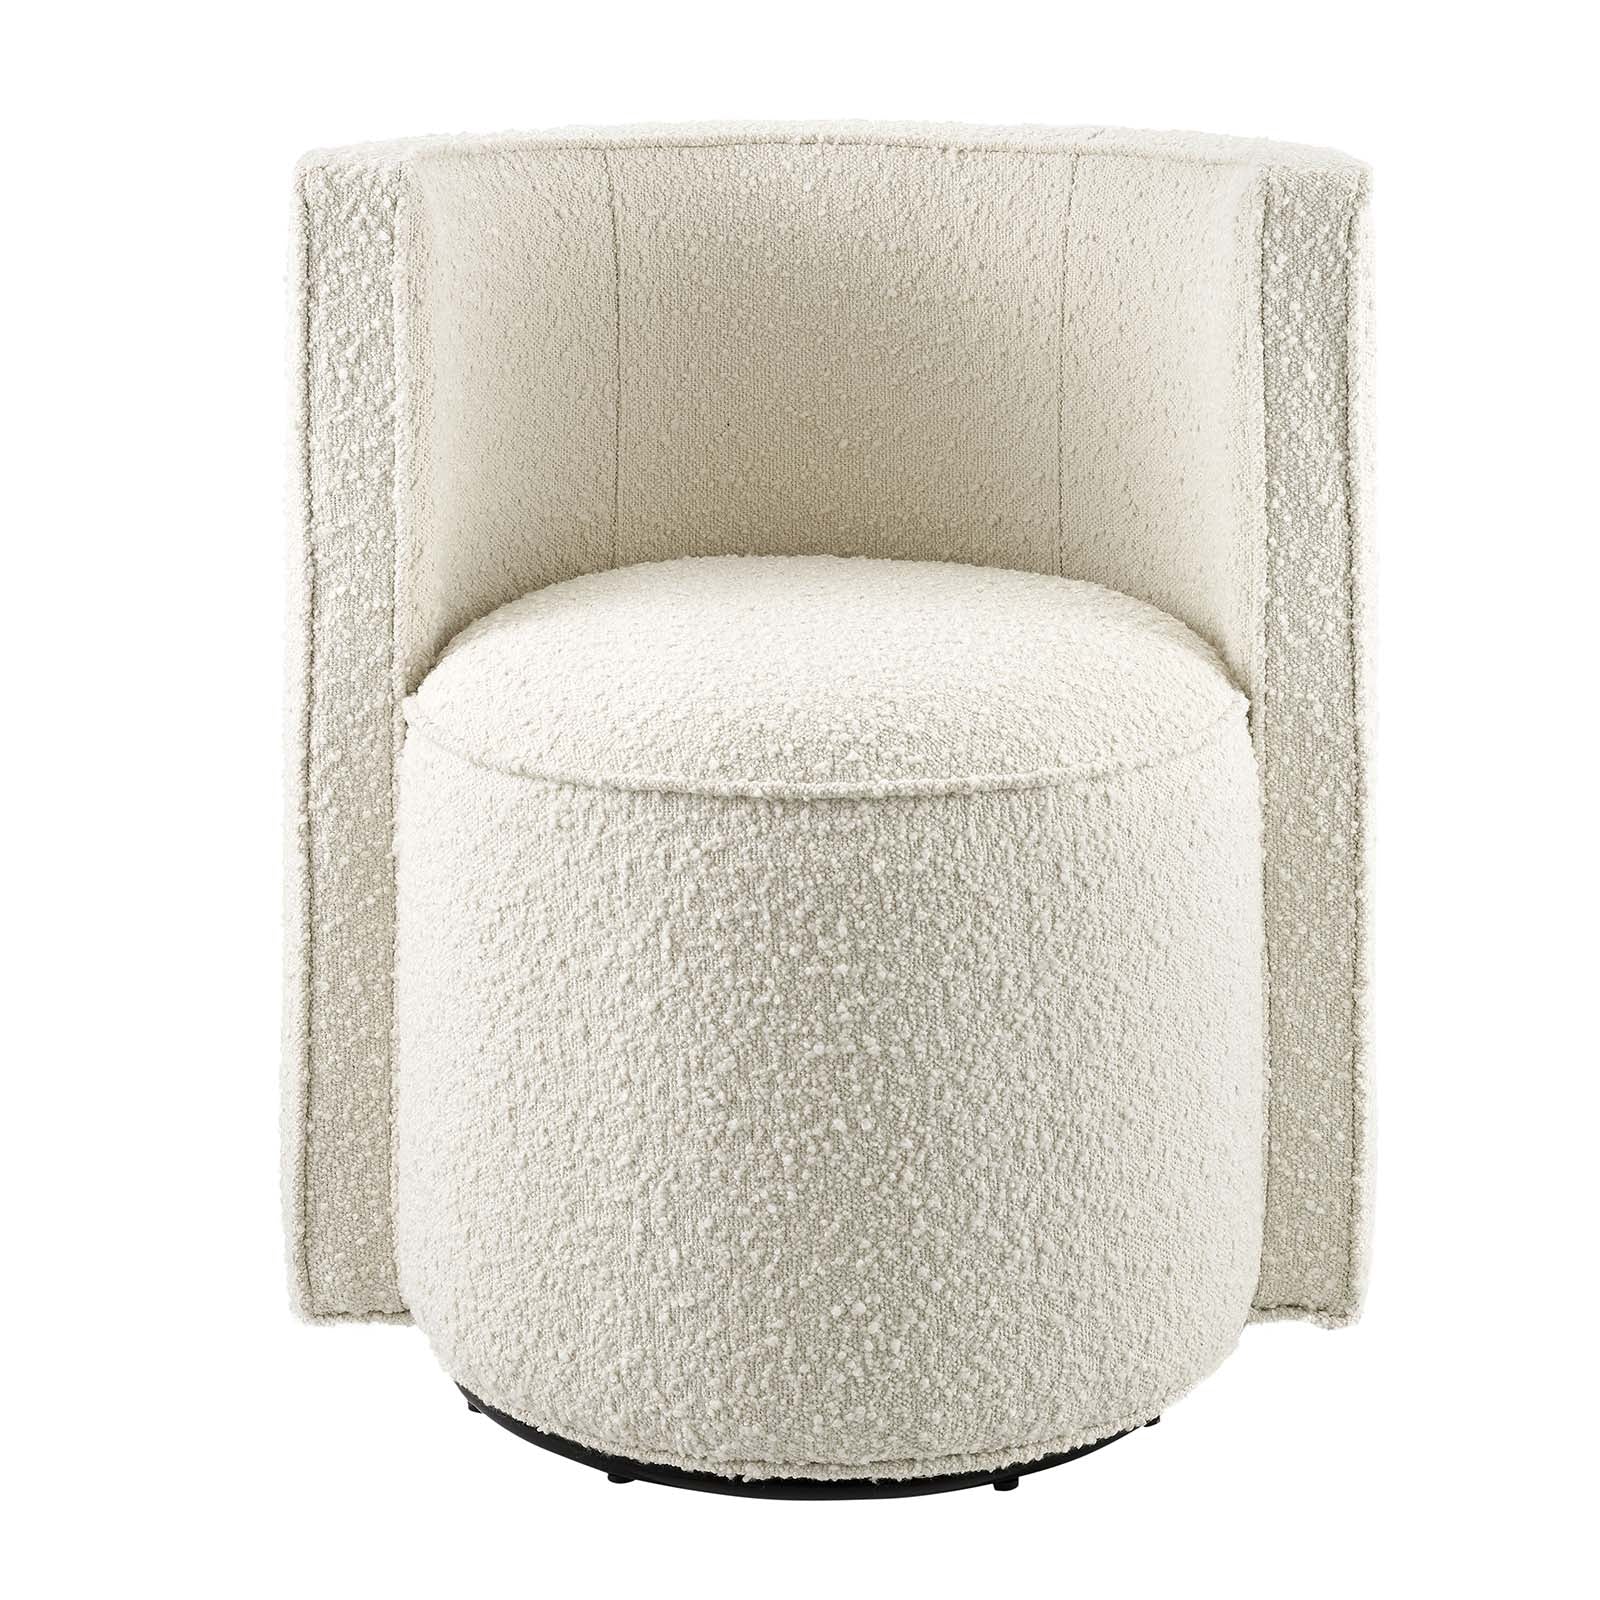 Della Boucle Fabric Swivel Chair - East Shore Modern Home Furnishings